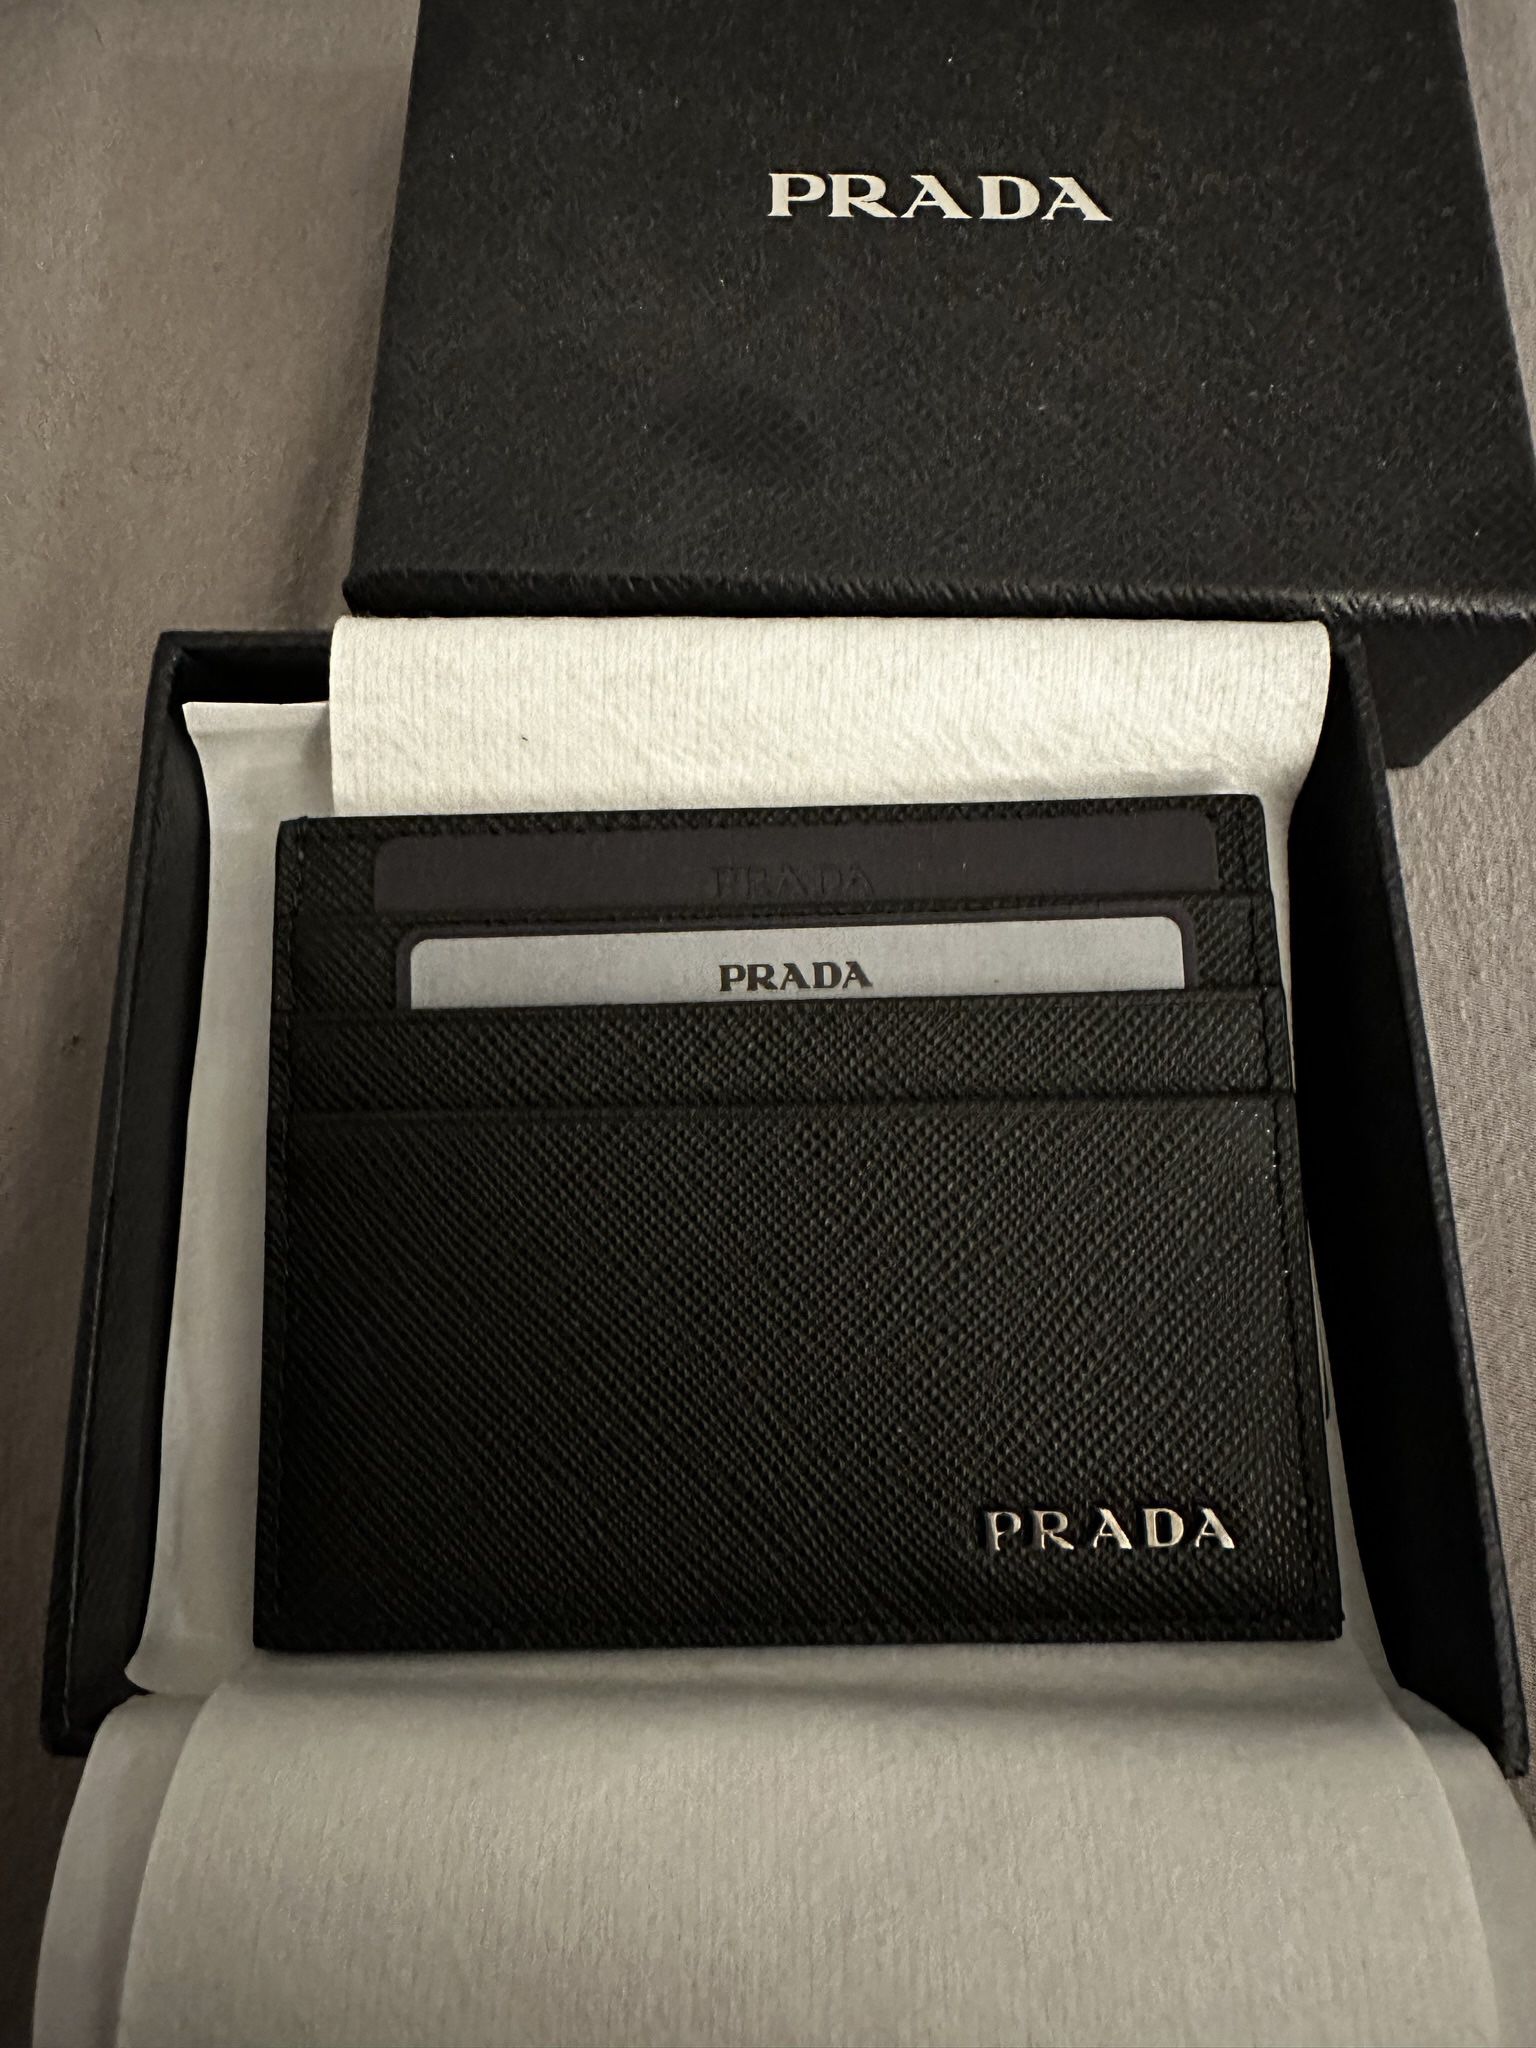 New - Prada Black Leather Card Holder / Wallet New